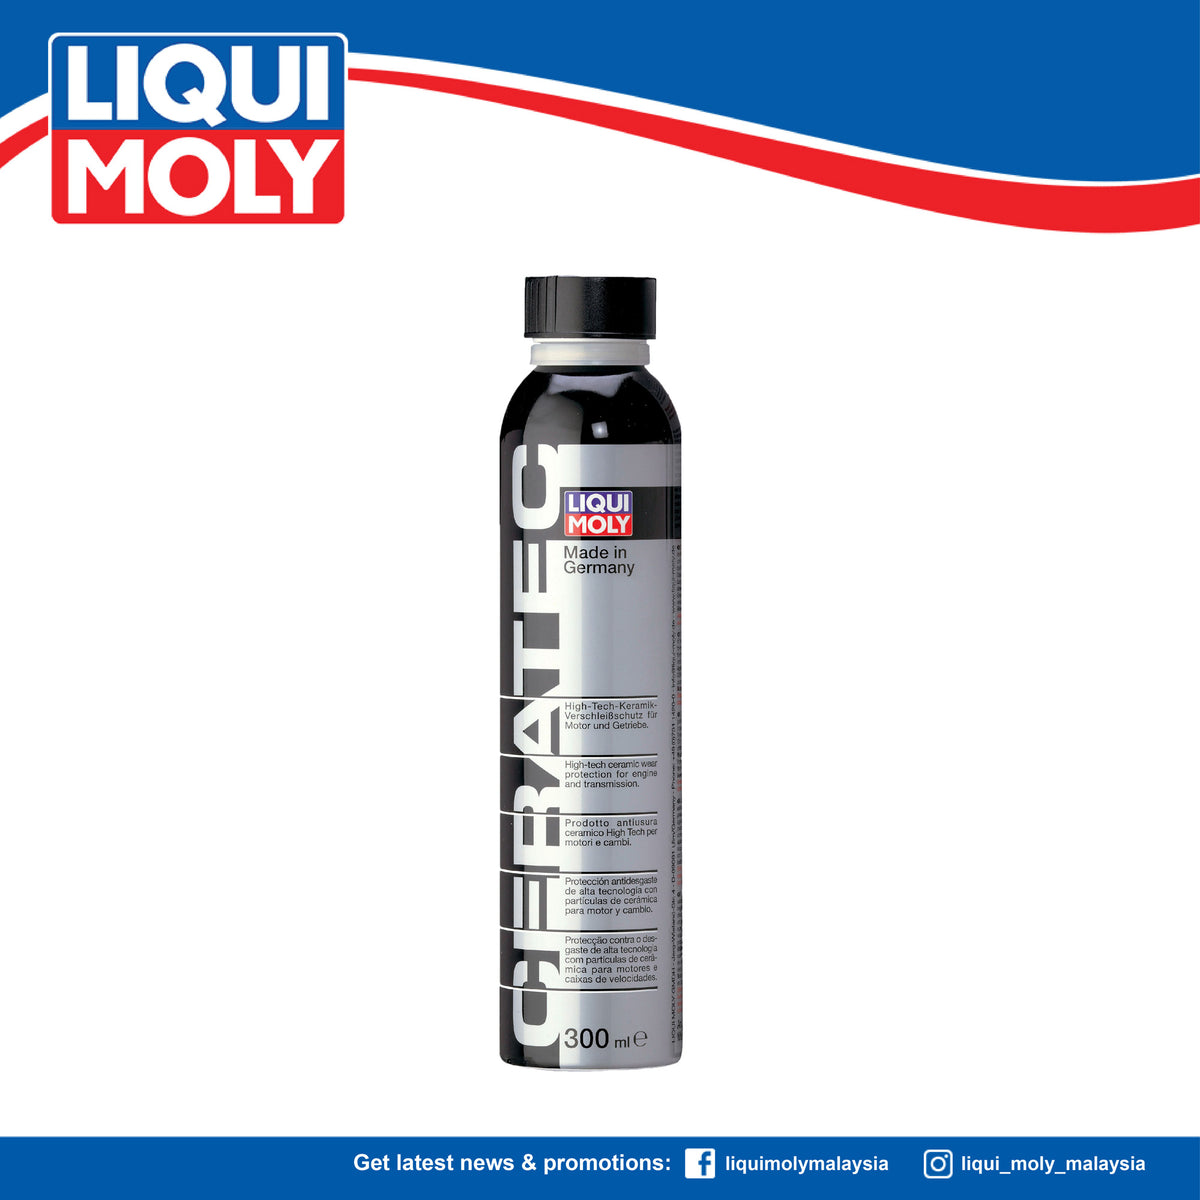 Liqui Moly Ceratec Oil Additive Treatment Ceramic Wear Protection